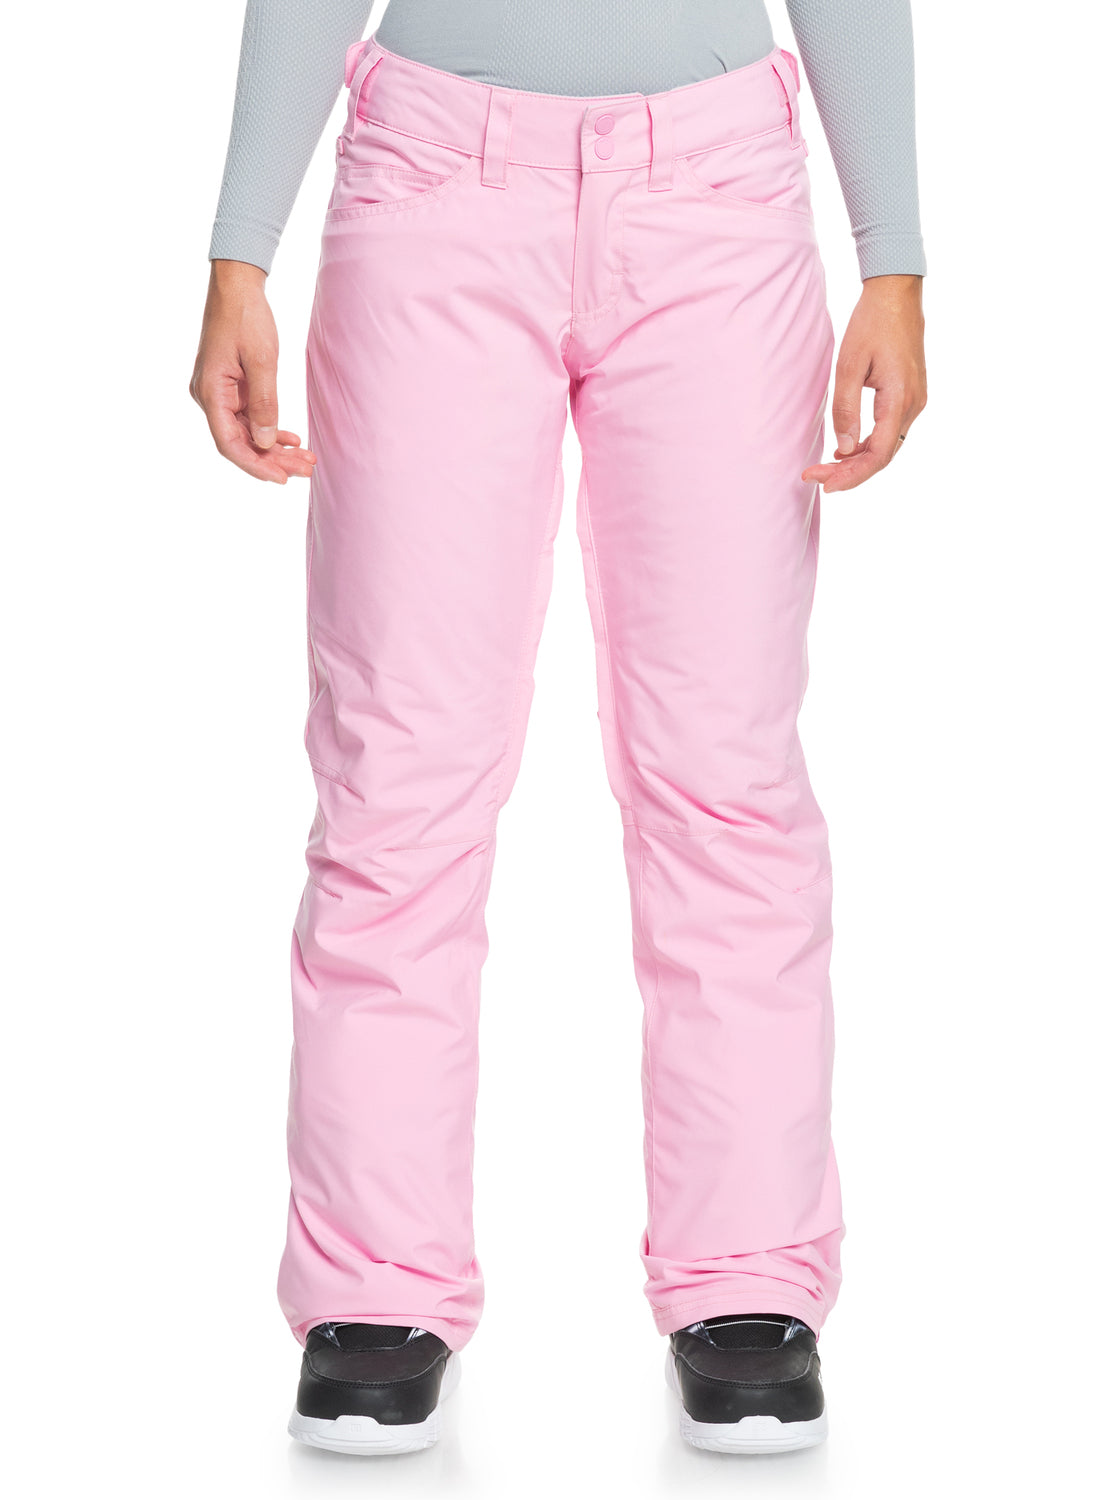 Roxy Backyard Pant Womens - Pink Frosting